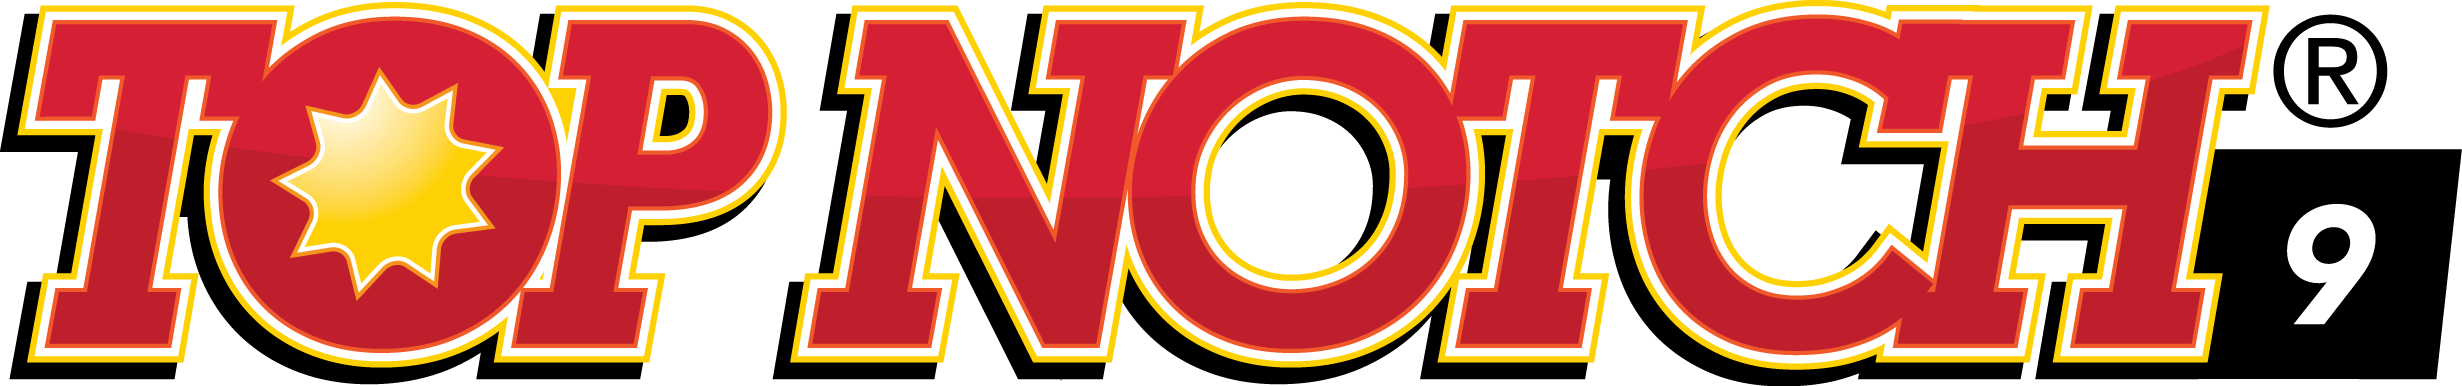 Top Notch 9 Logo